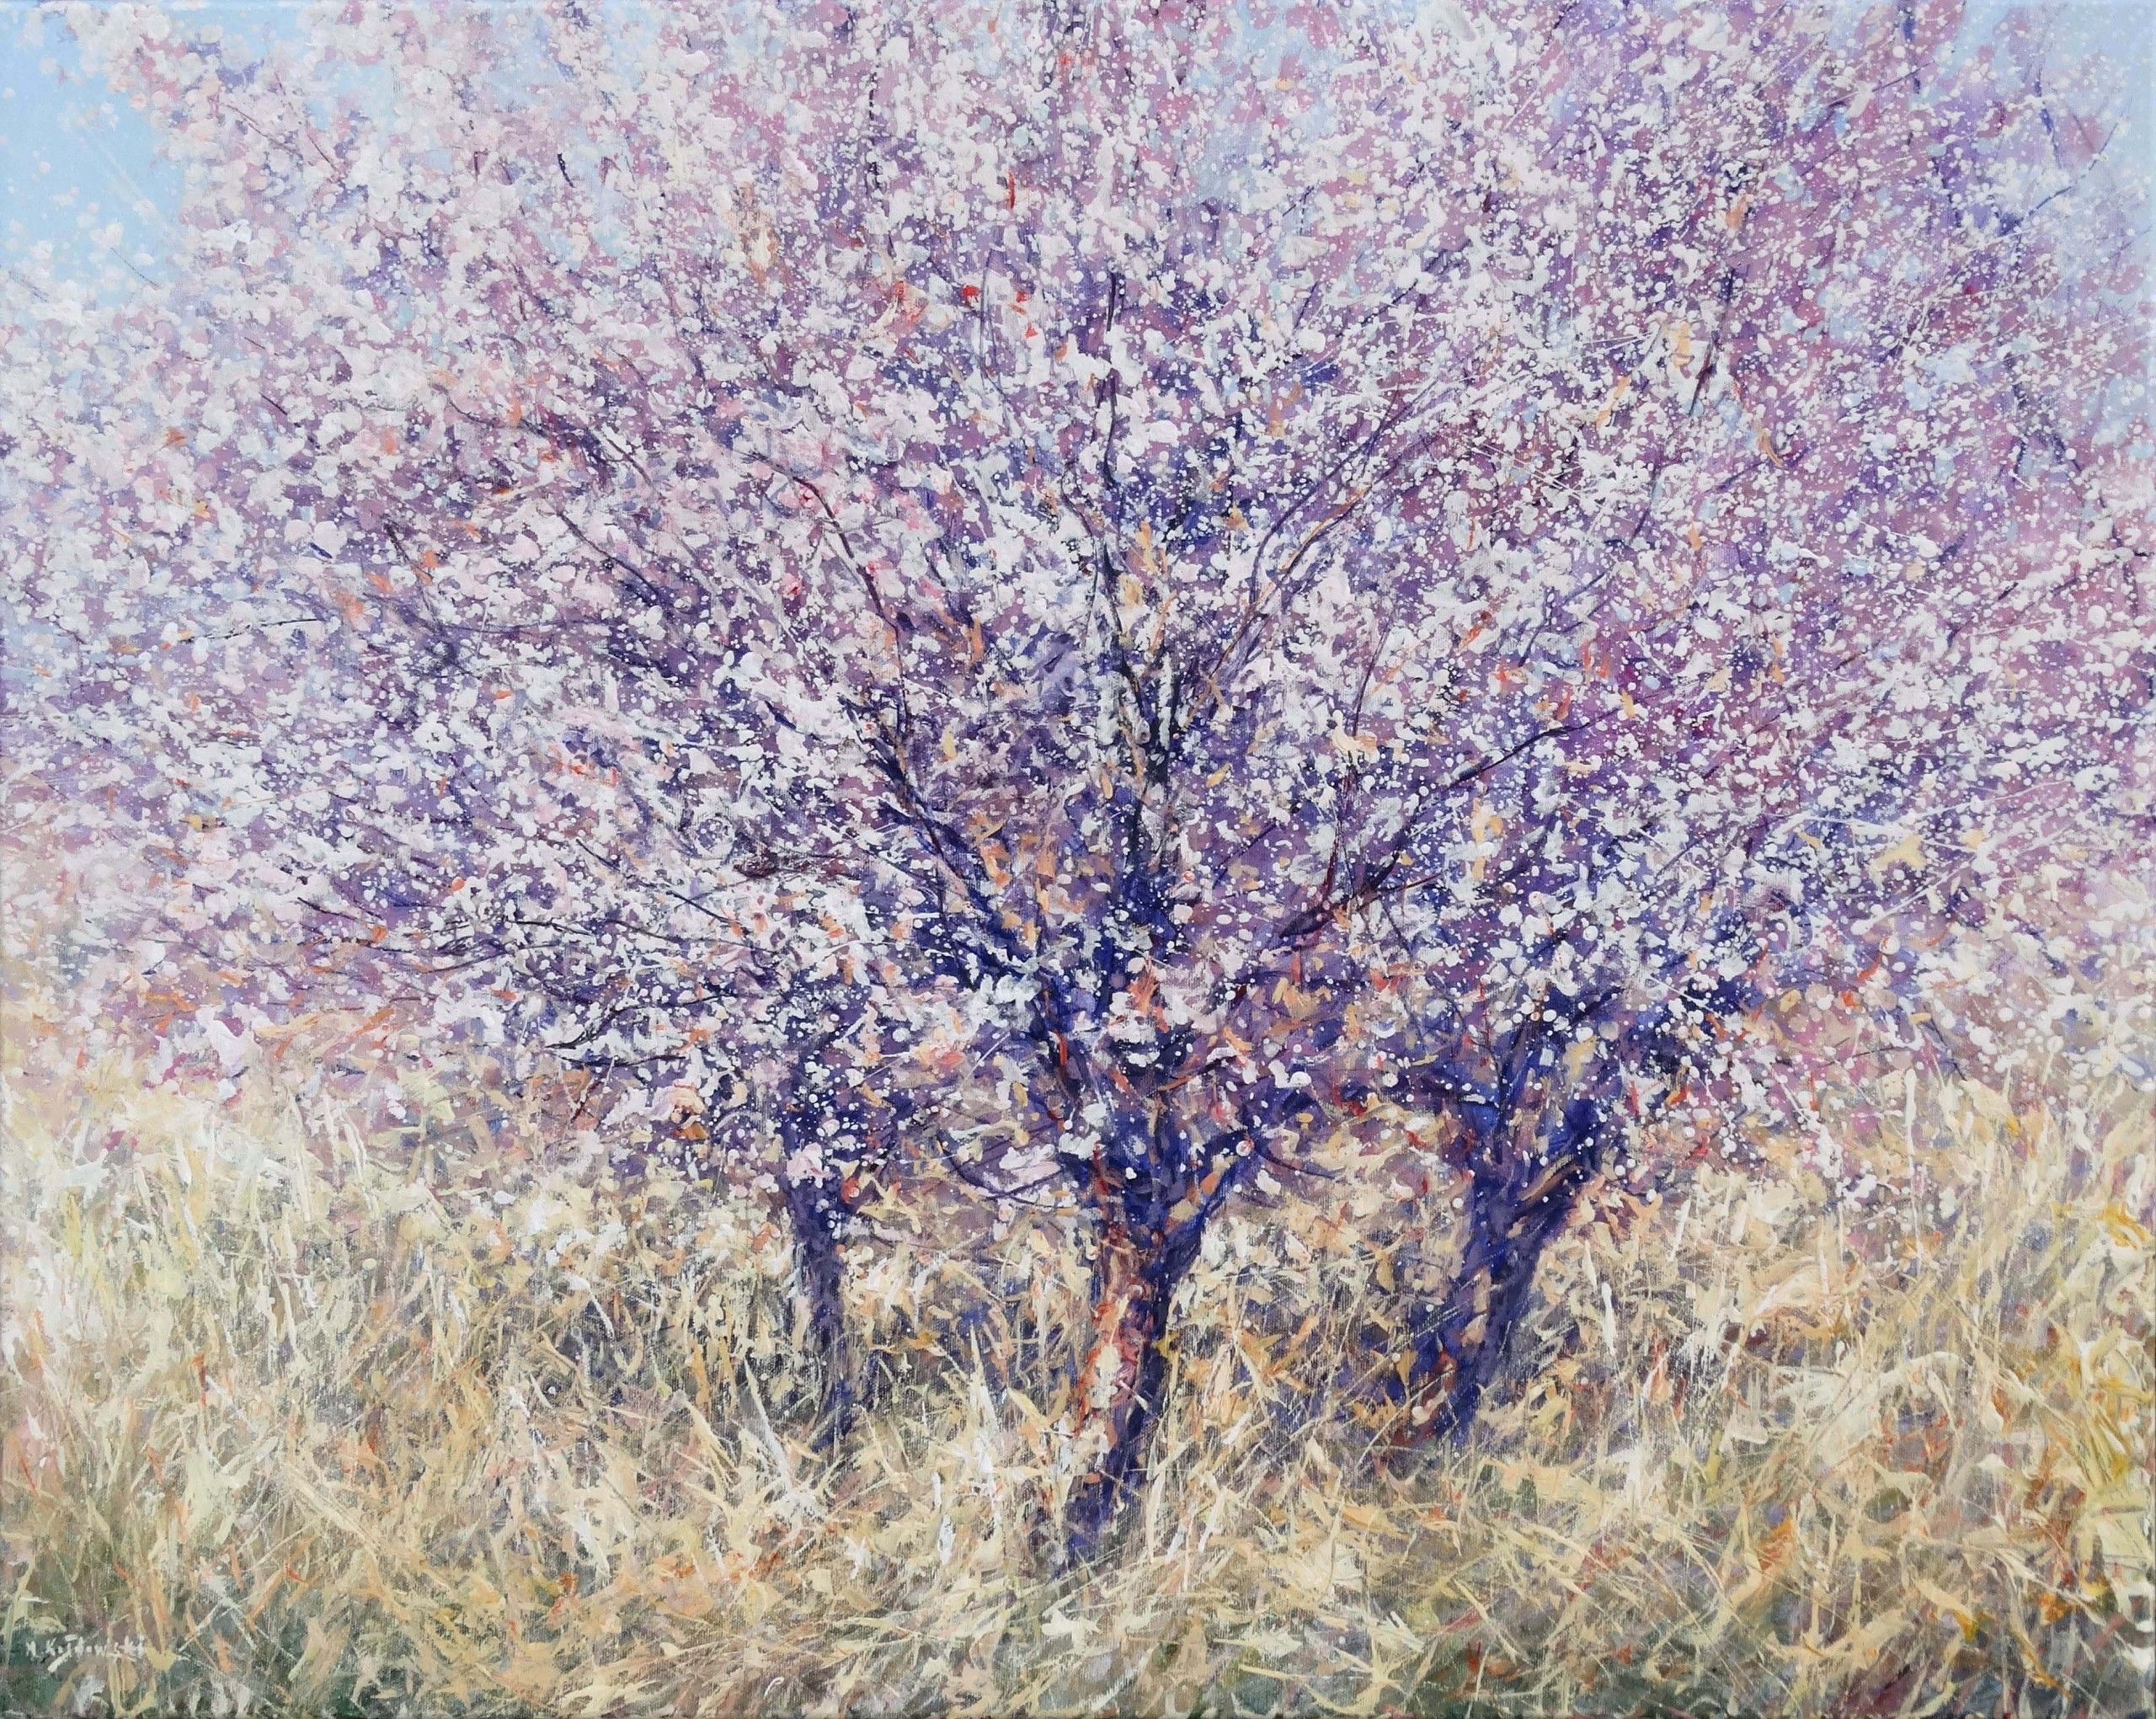 Mirabelle Orchard by Mariusz Kaldowski